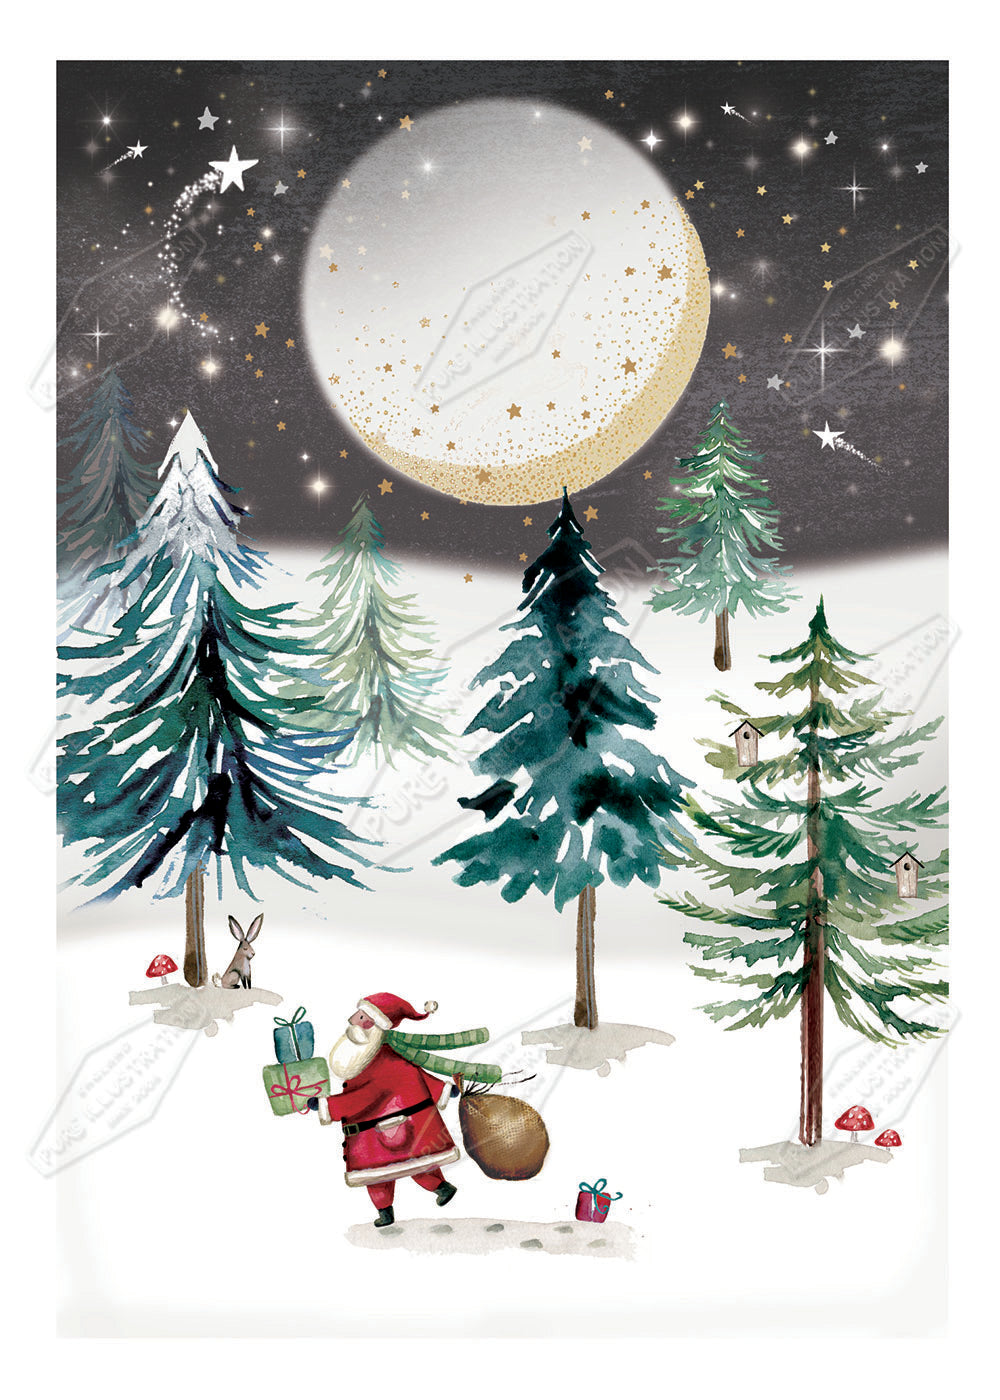 00030049DEV - Deva Evans is represented by Pure Art Licensing Agency - Christmas Greeting Card Design